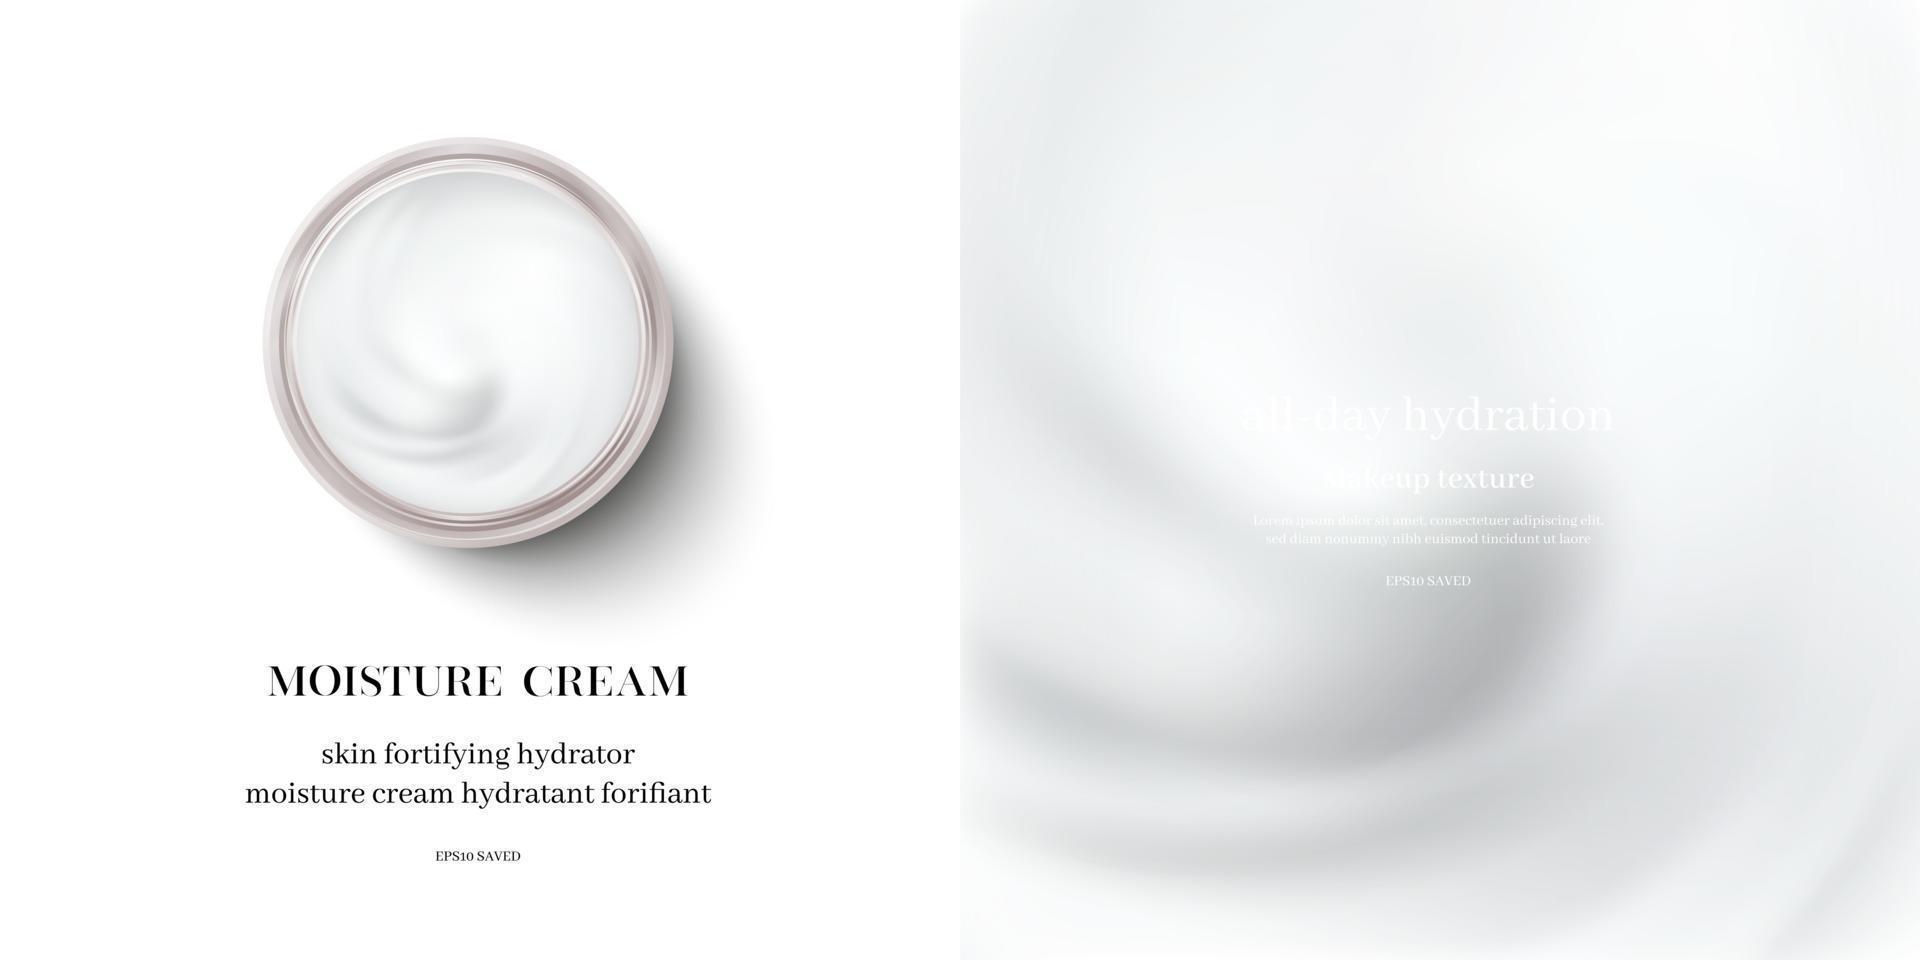 moisturizing cream or swirl cosmetic cream, top view vector. vector